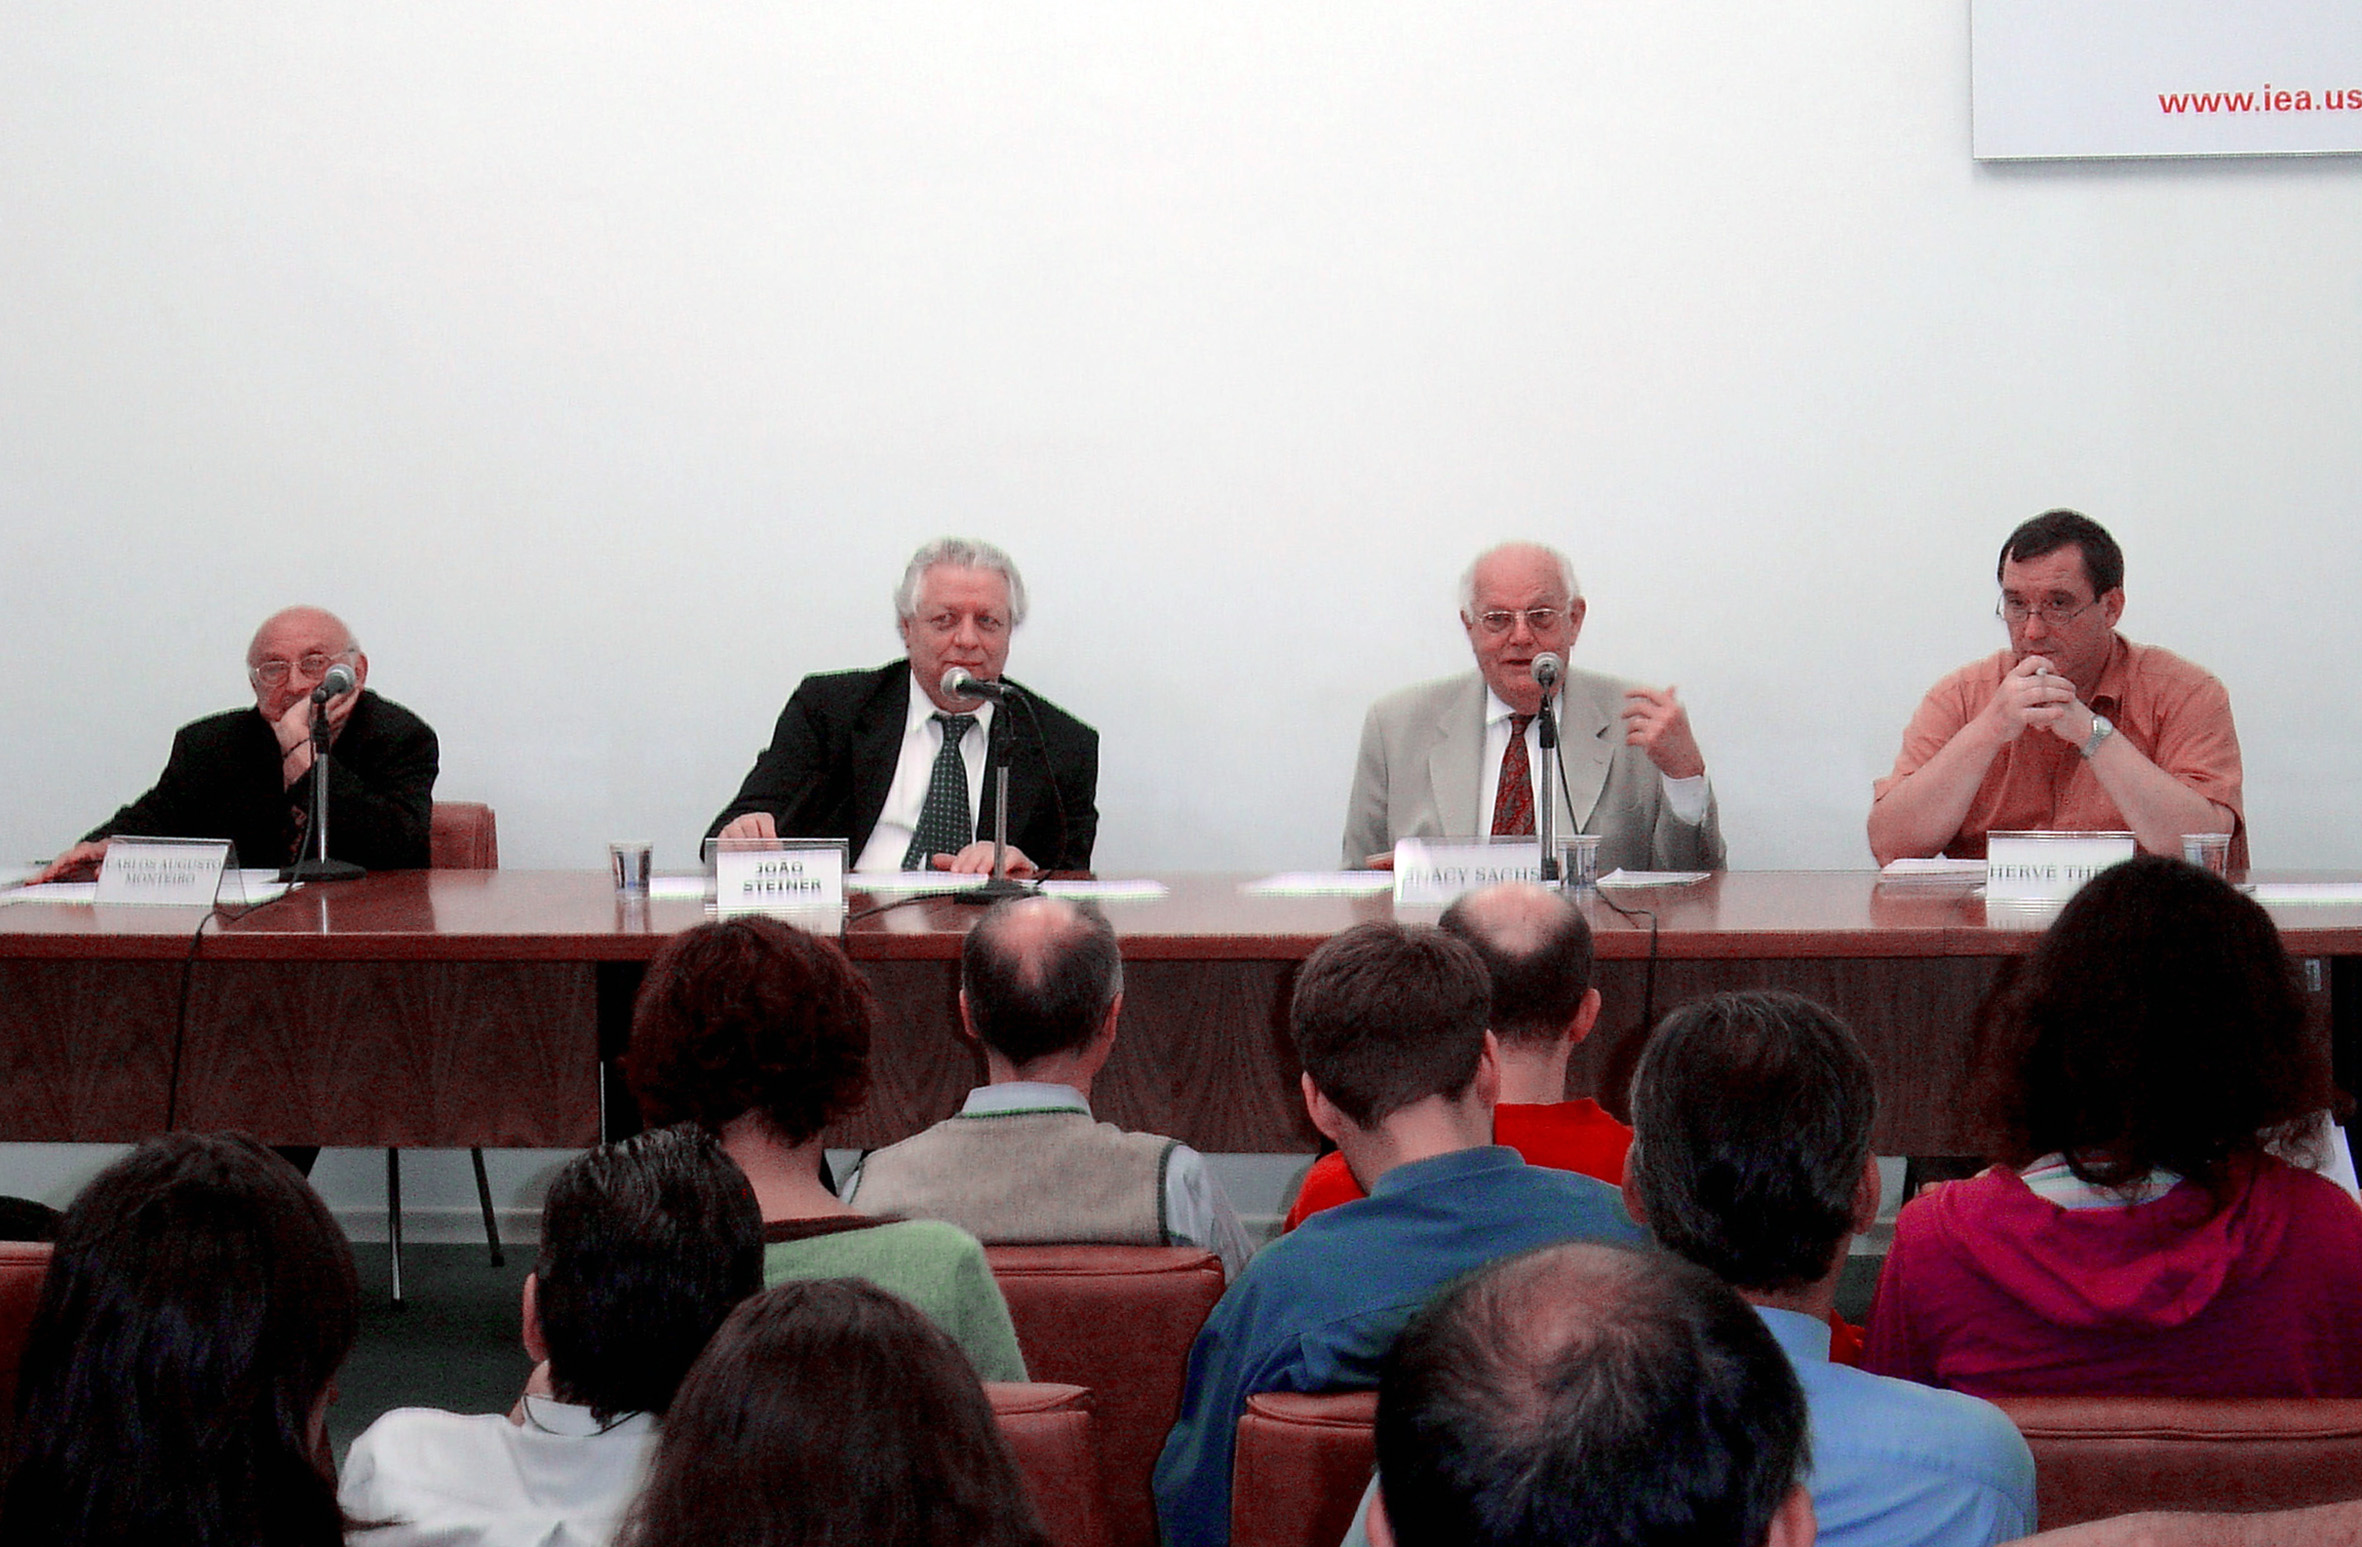 Carlos Augusto Monteiro, João Steiner, Ignacy Sachs e Hervé Théry